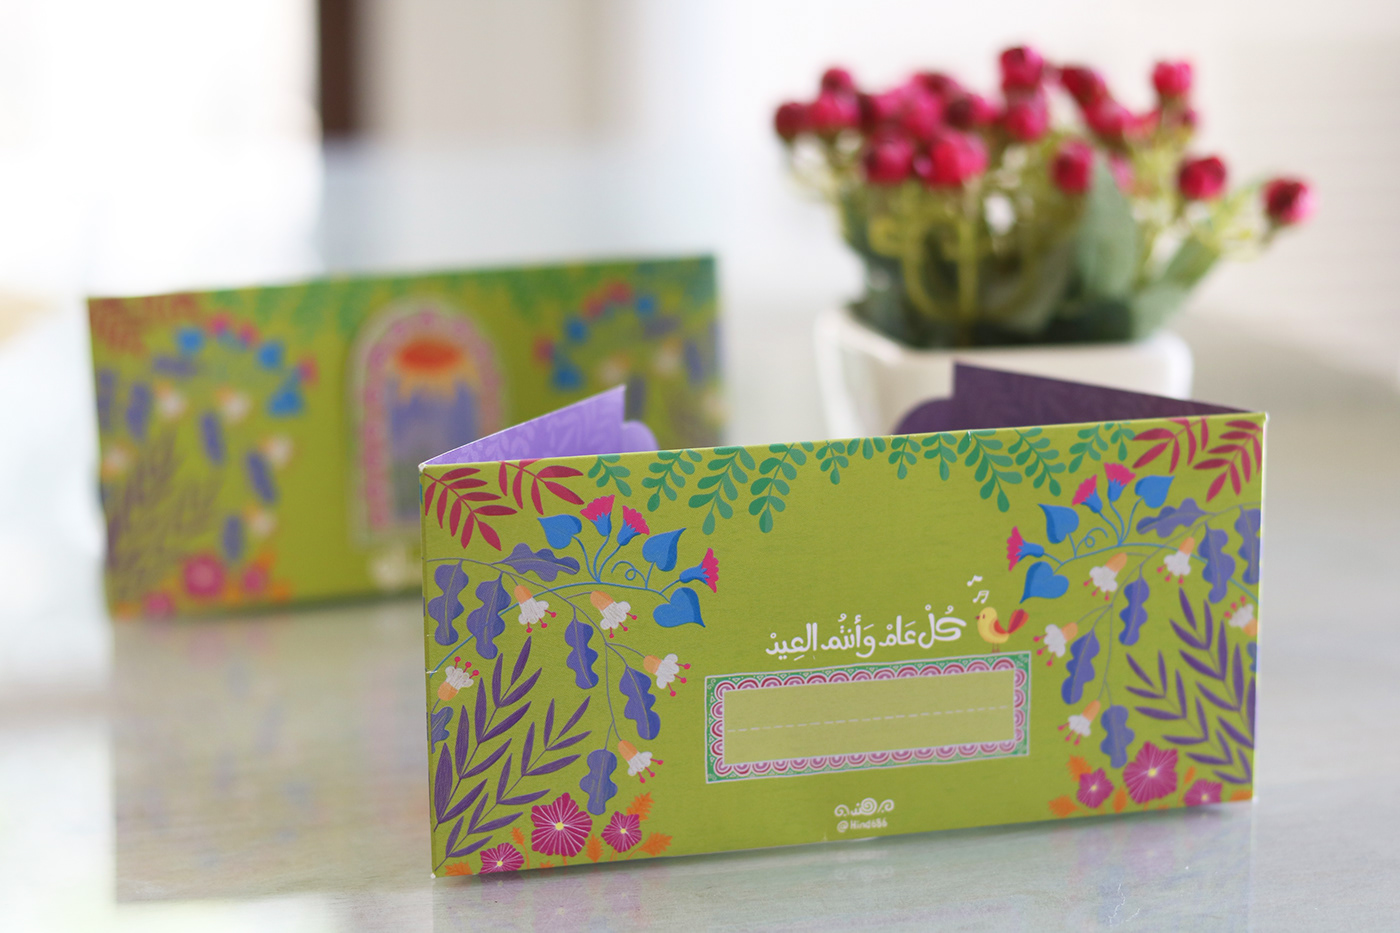 Eid money envelopes Ramadhan Al-Fitr Packaging envelope hind686 alfitr FITR